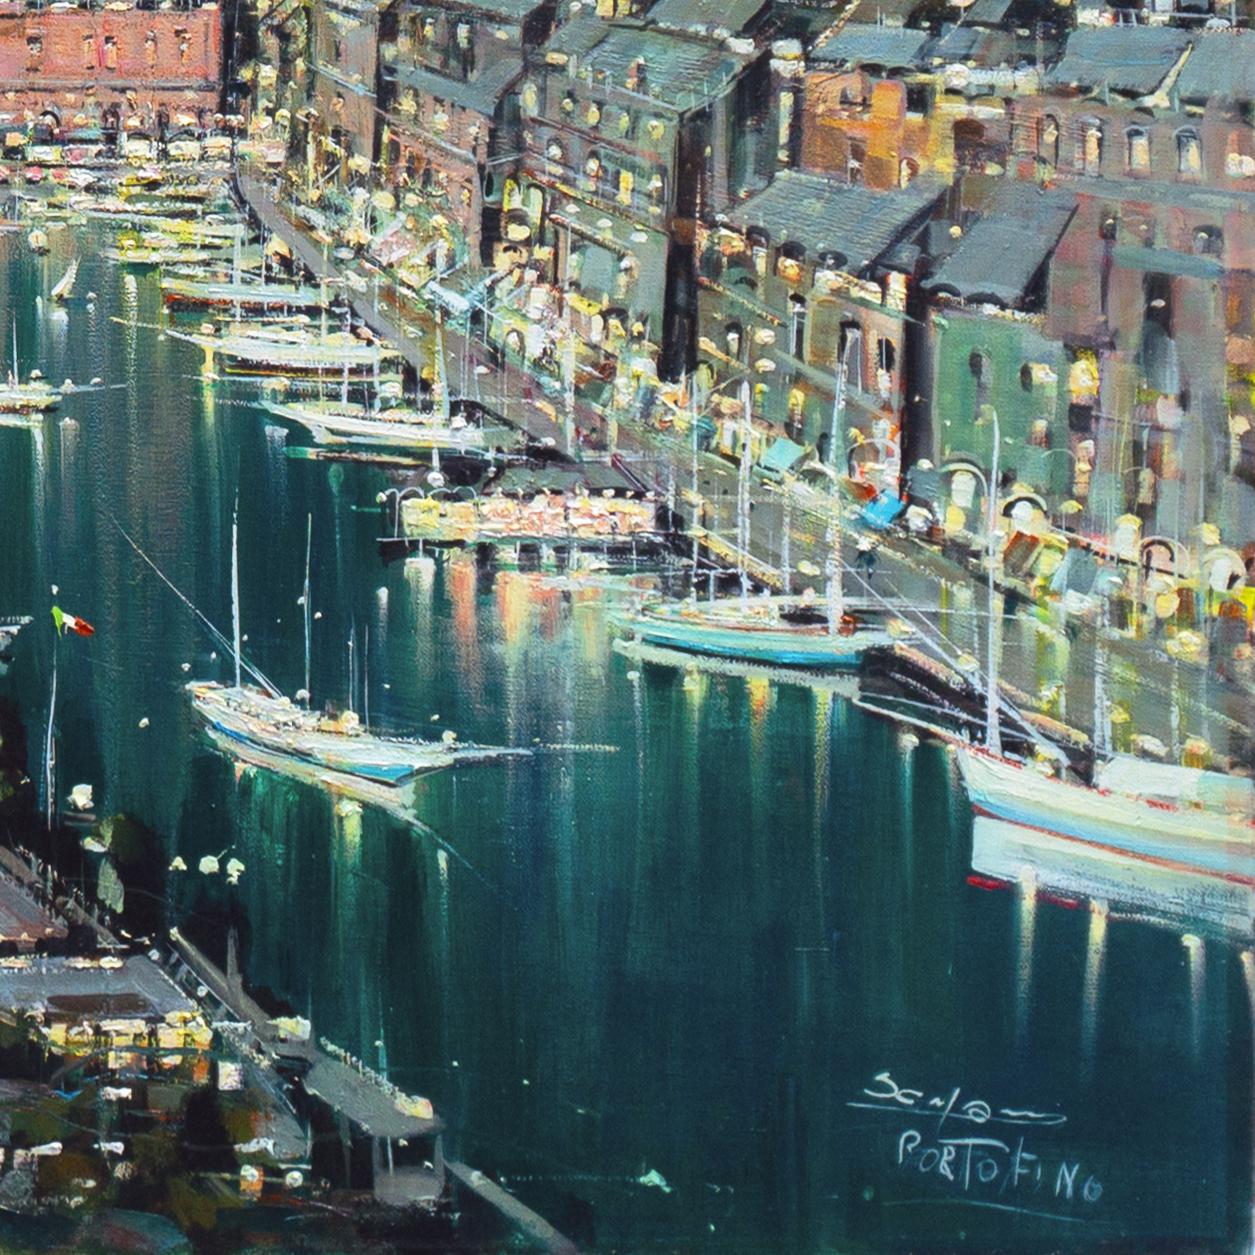 'Portofino', Genoa, Italian Riviera, Naples Academy of Fine Art, Amalfi Coast - Painting by Mario Sanzone